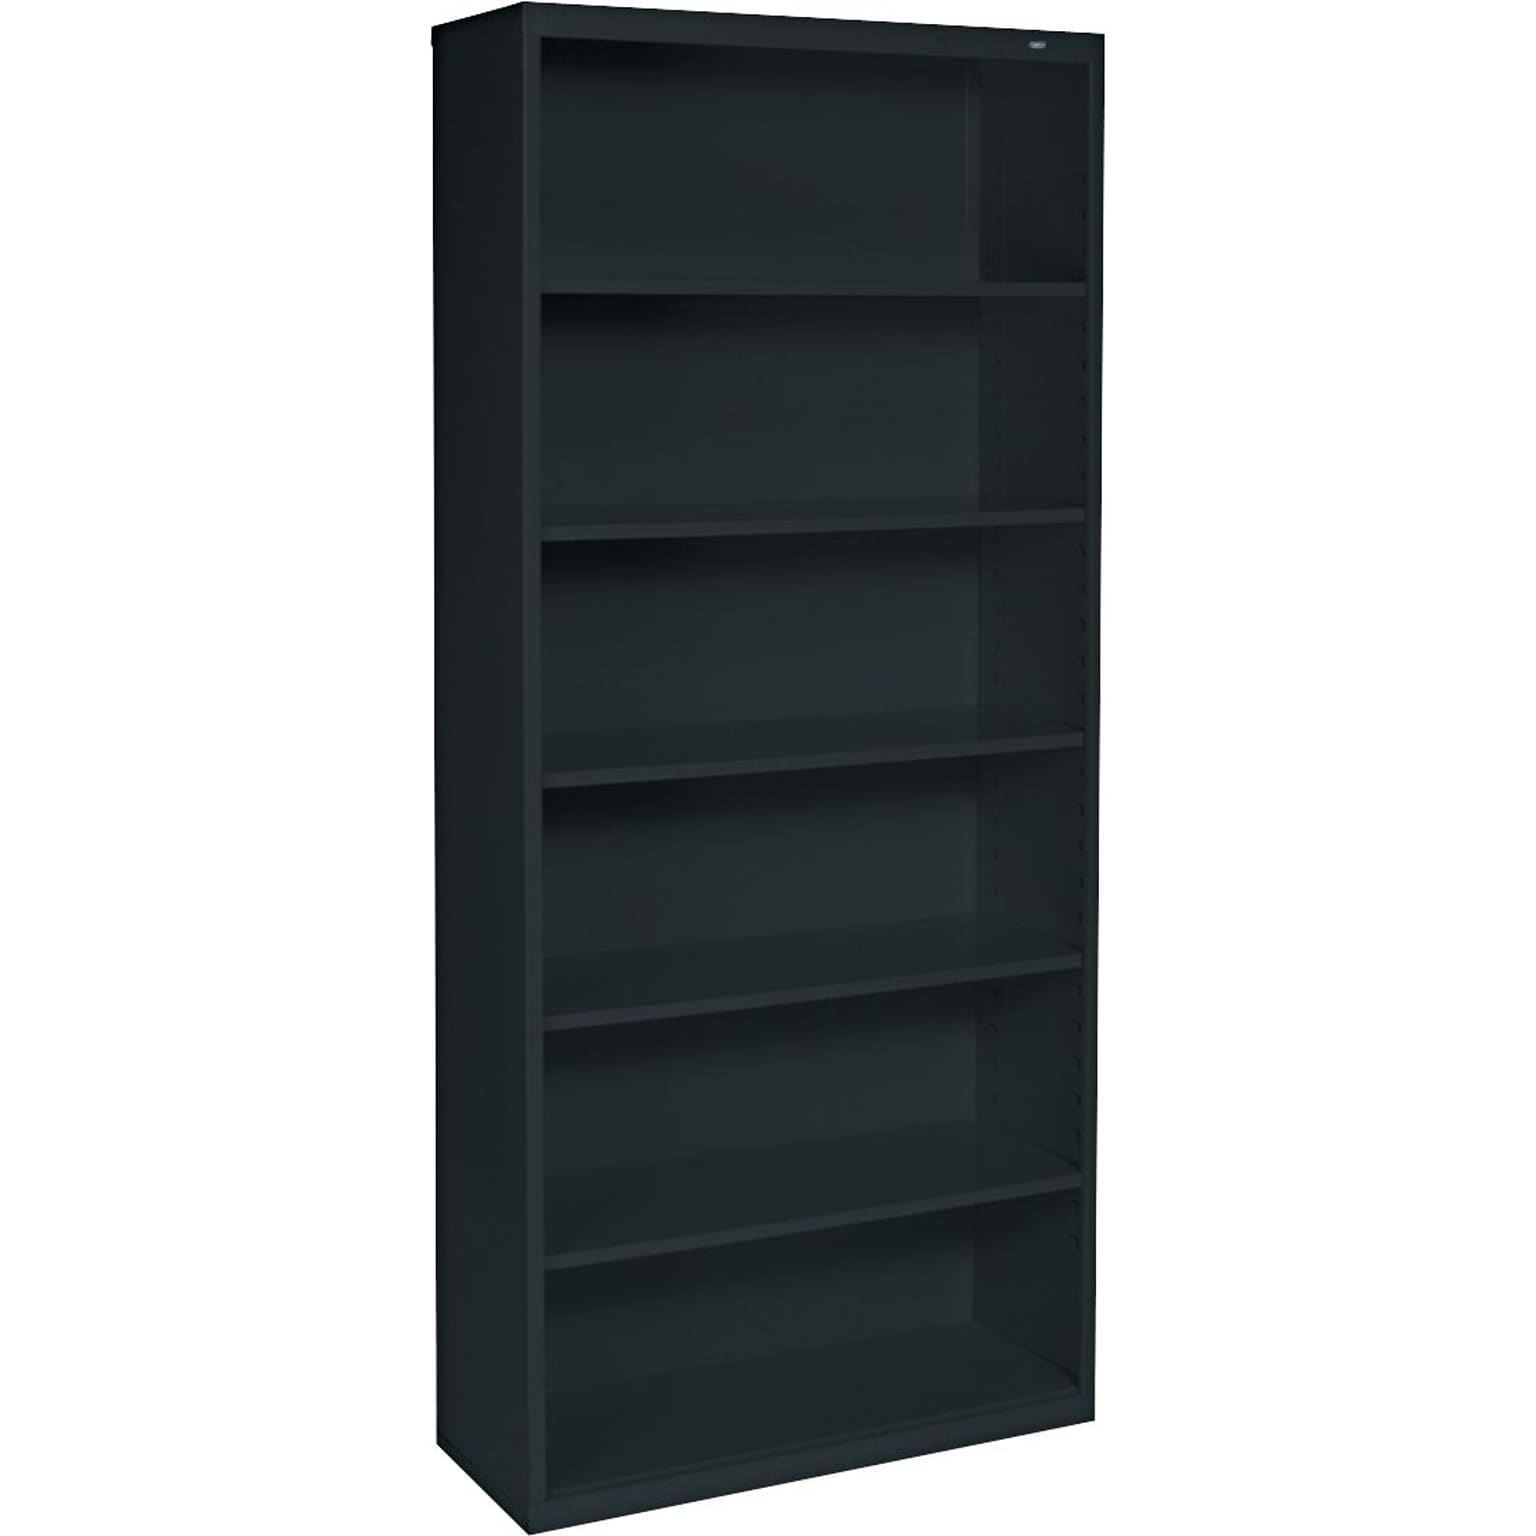 Tennsco 6-Shelf 78H Metal Bookcase, Black (BC18-72- BLK)